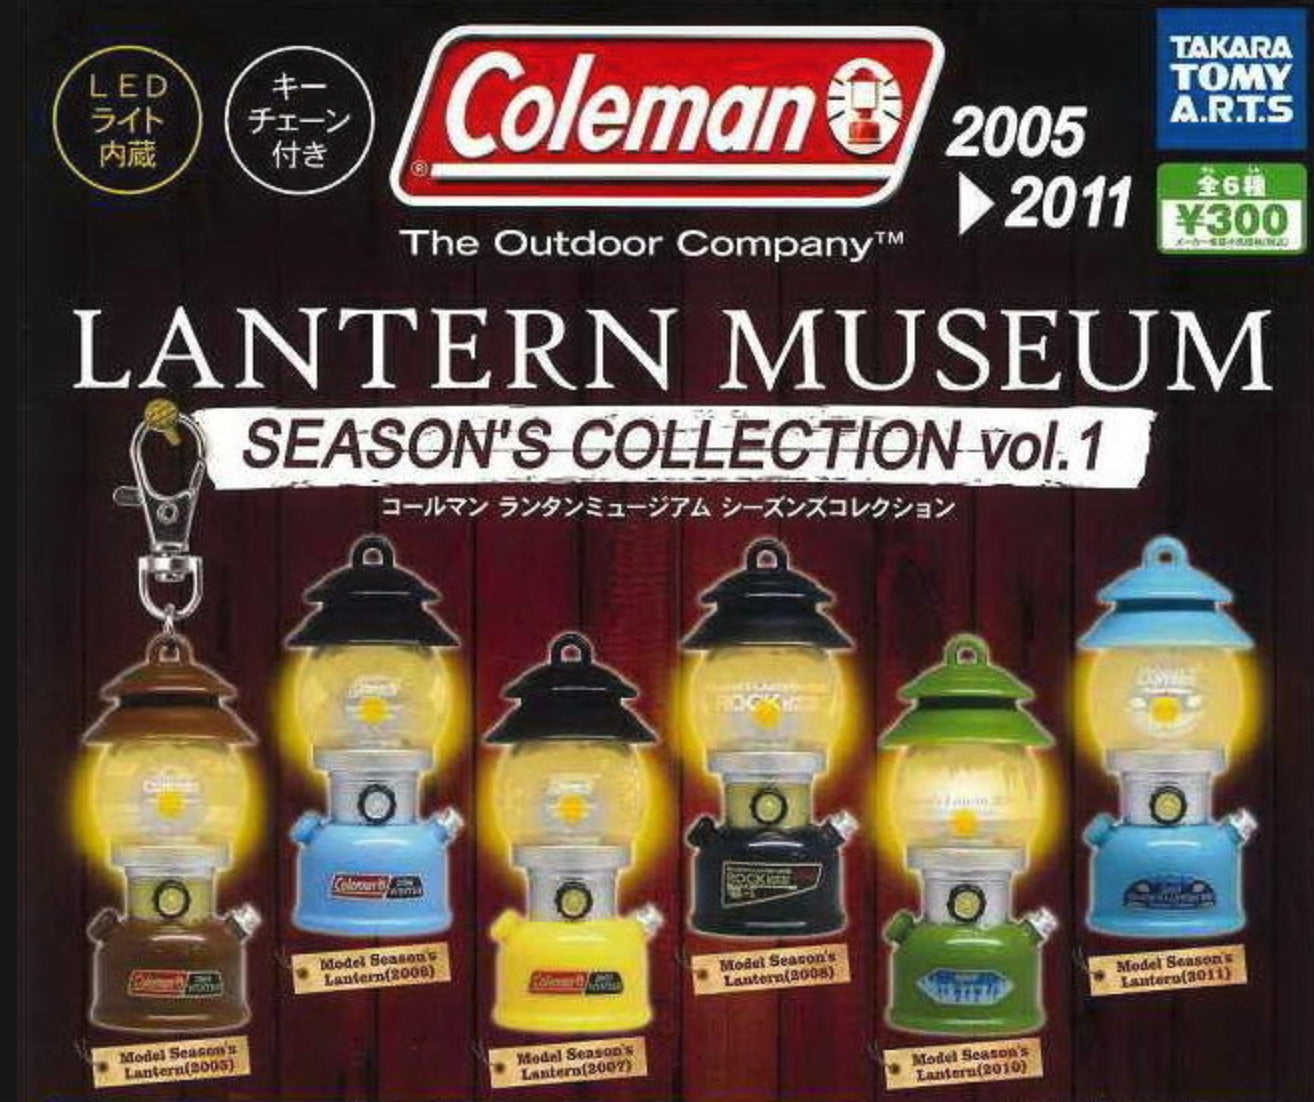 Takara Tomy Gashapon Coleman Lantern Museum Season's Collection Vol 1 5+1 Secret 6 Strap Figure Set